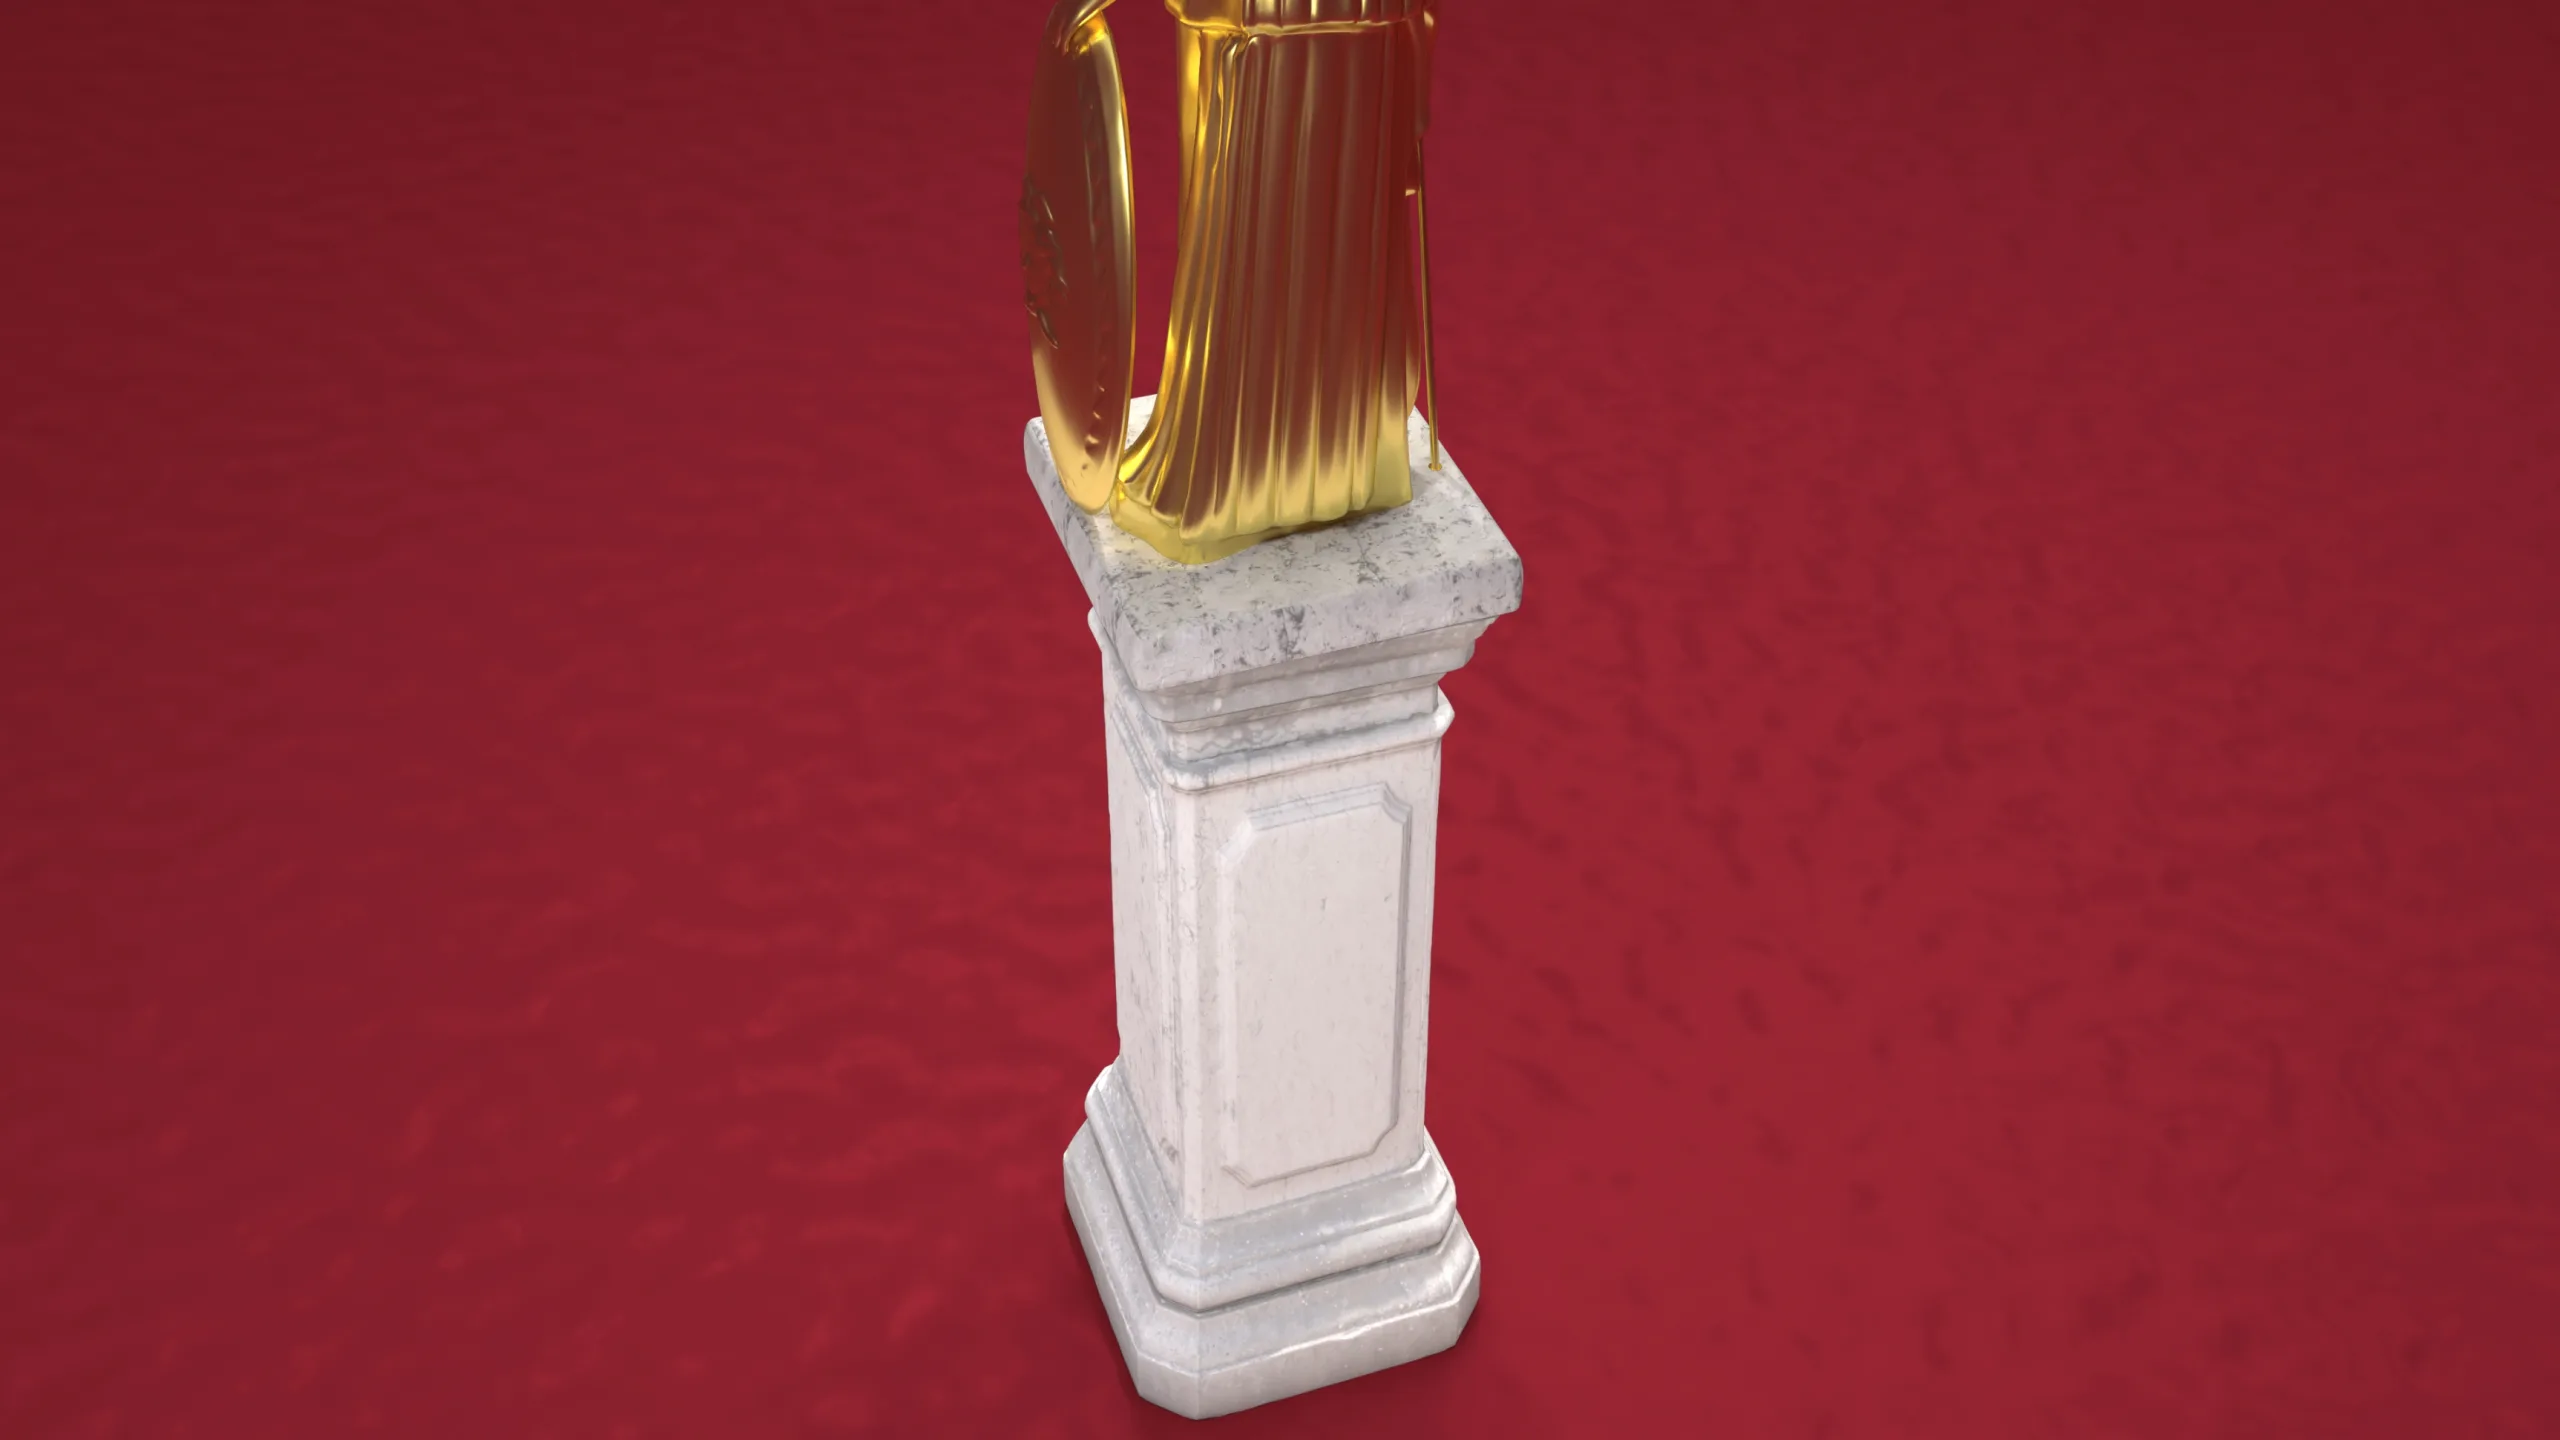 Athena Statue 4K